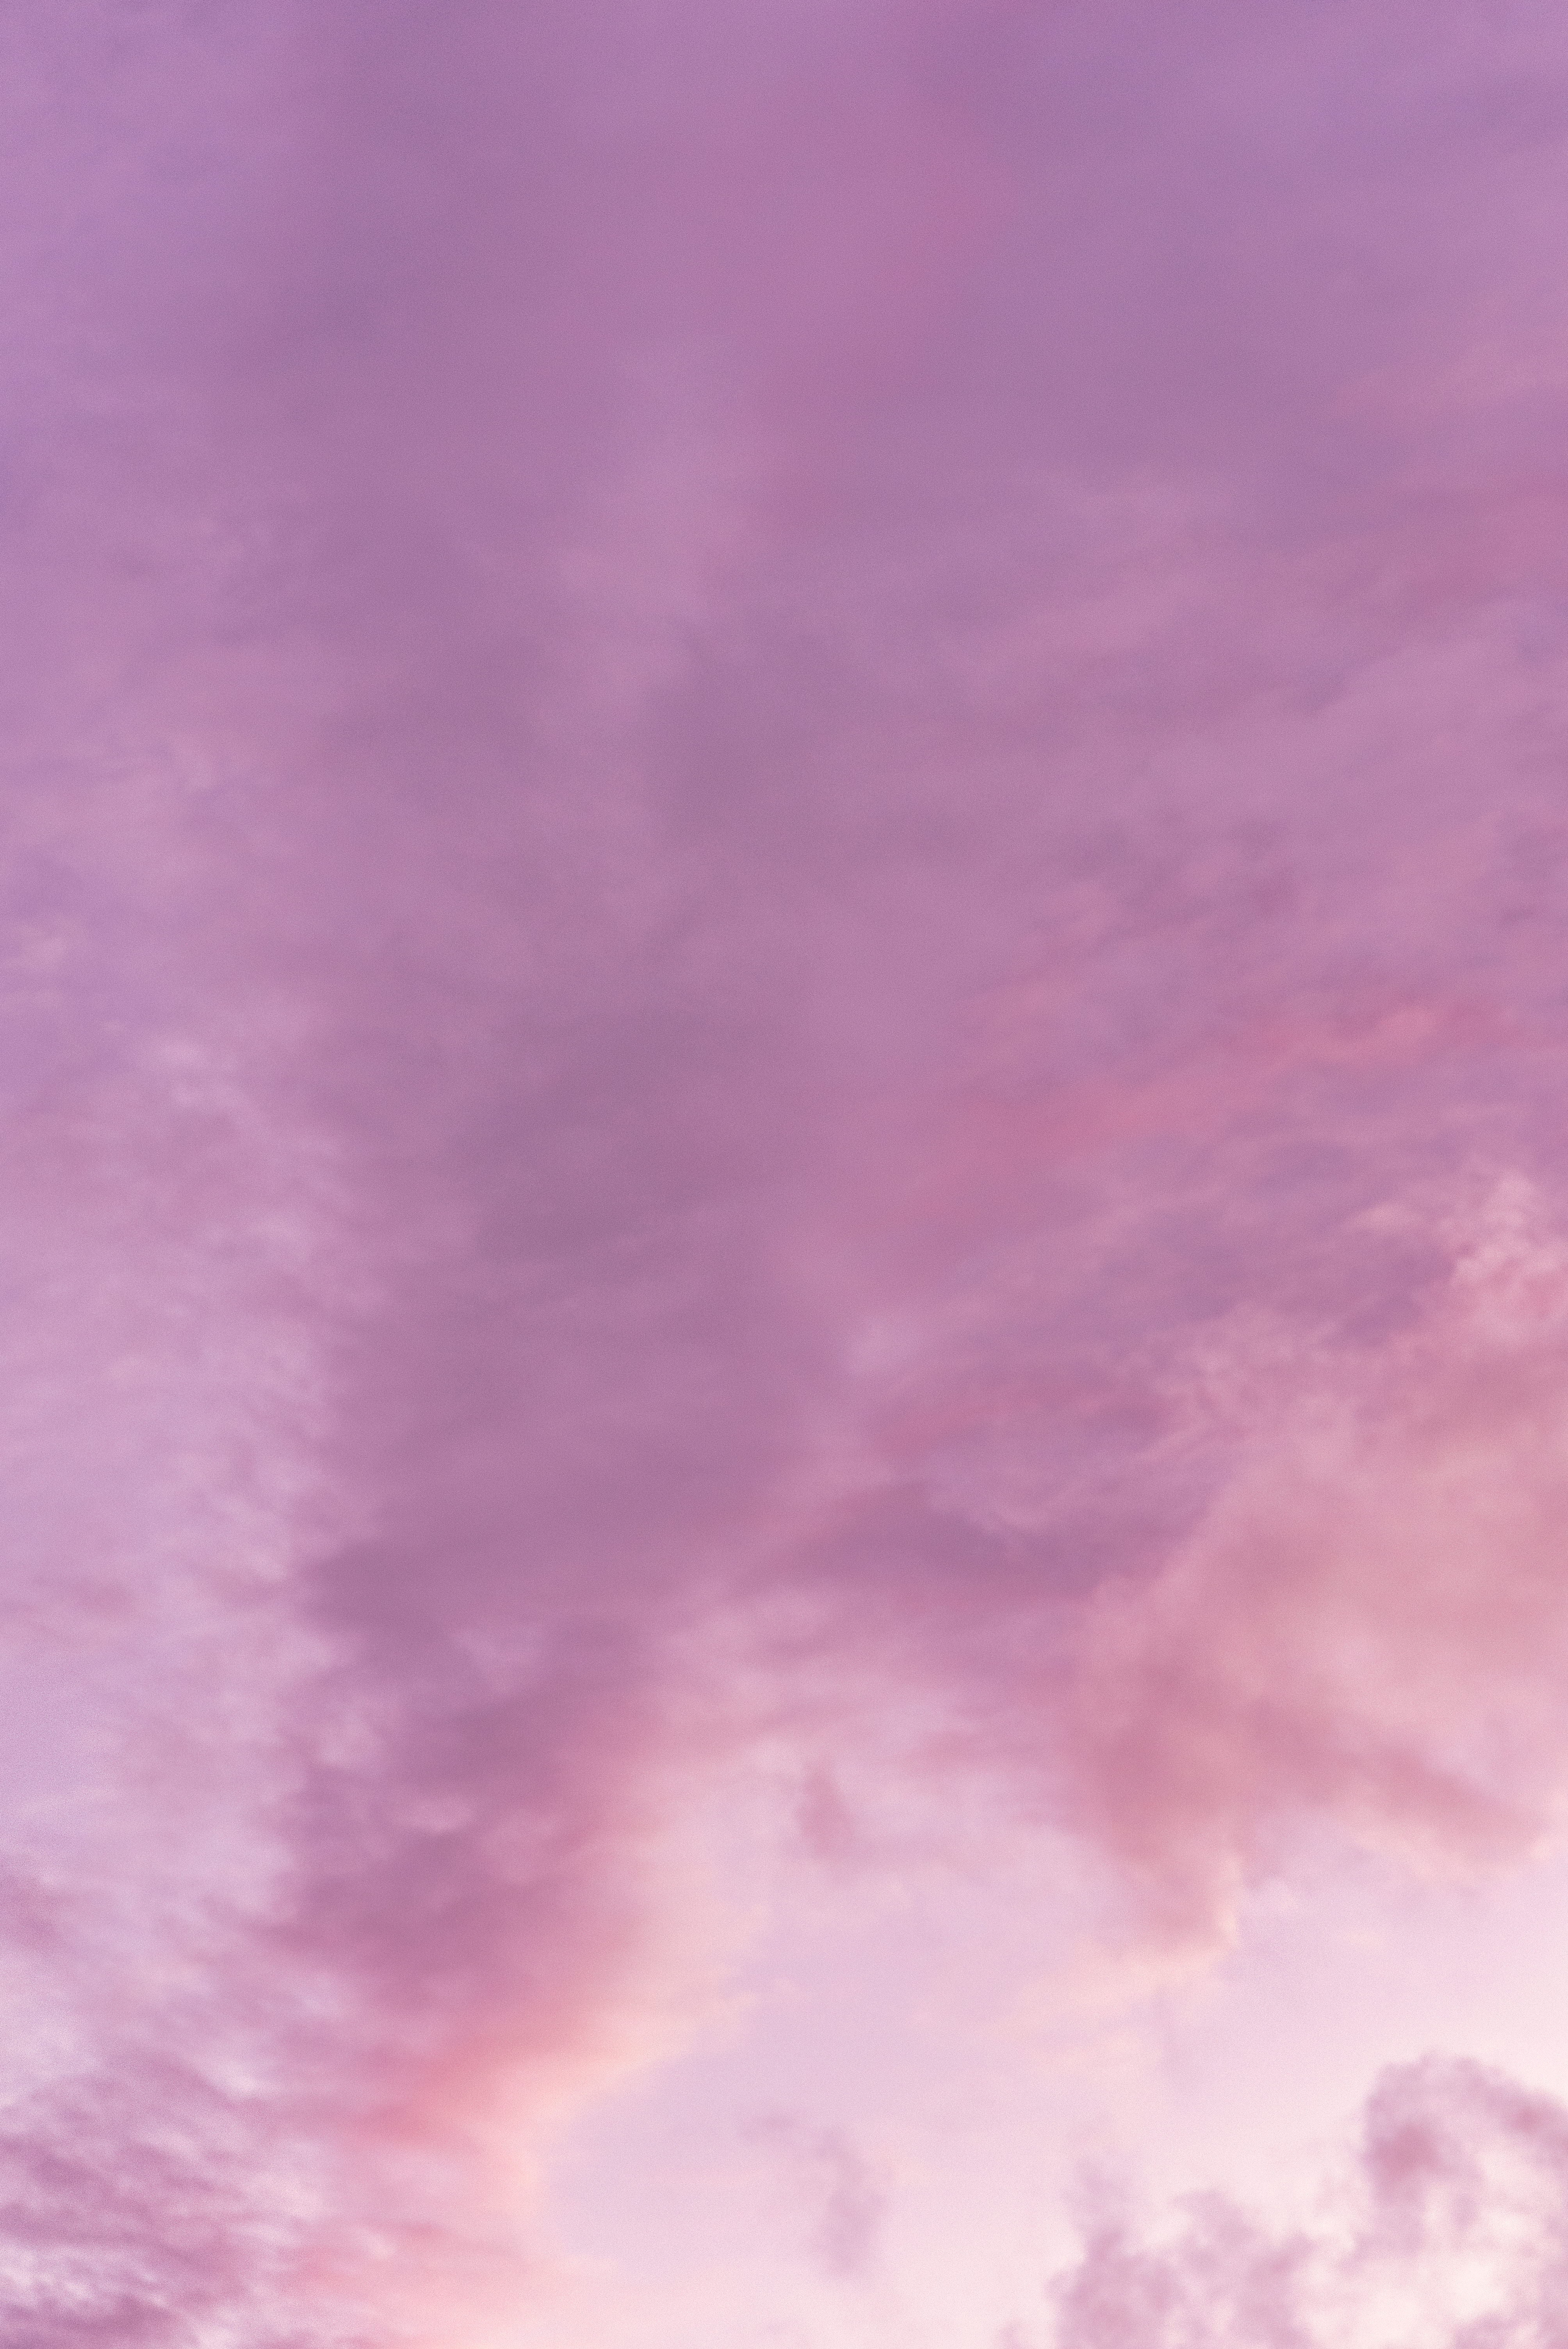 Purple sundown sky with fluffy clouds · Free